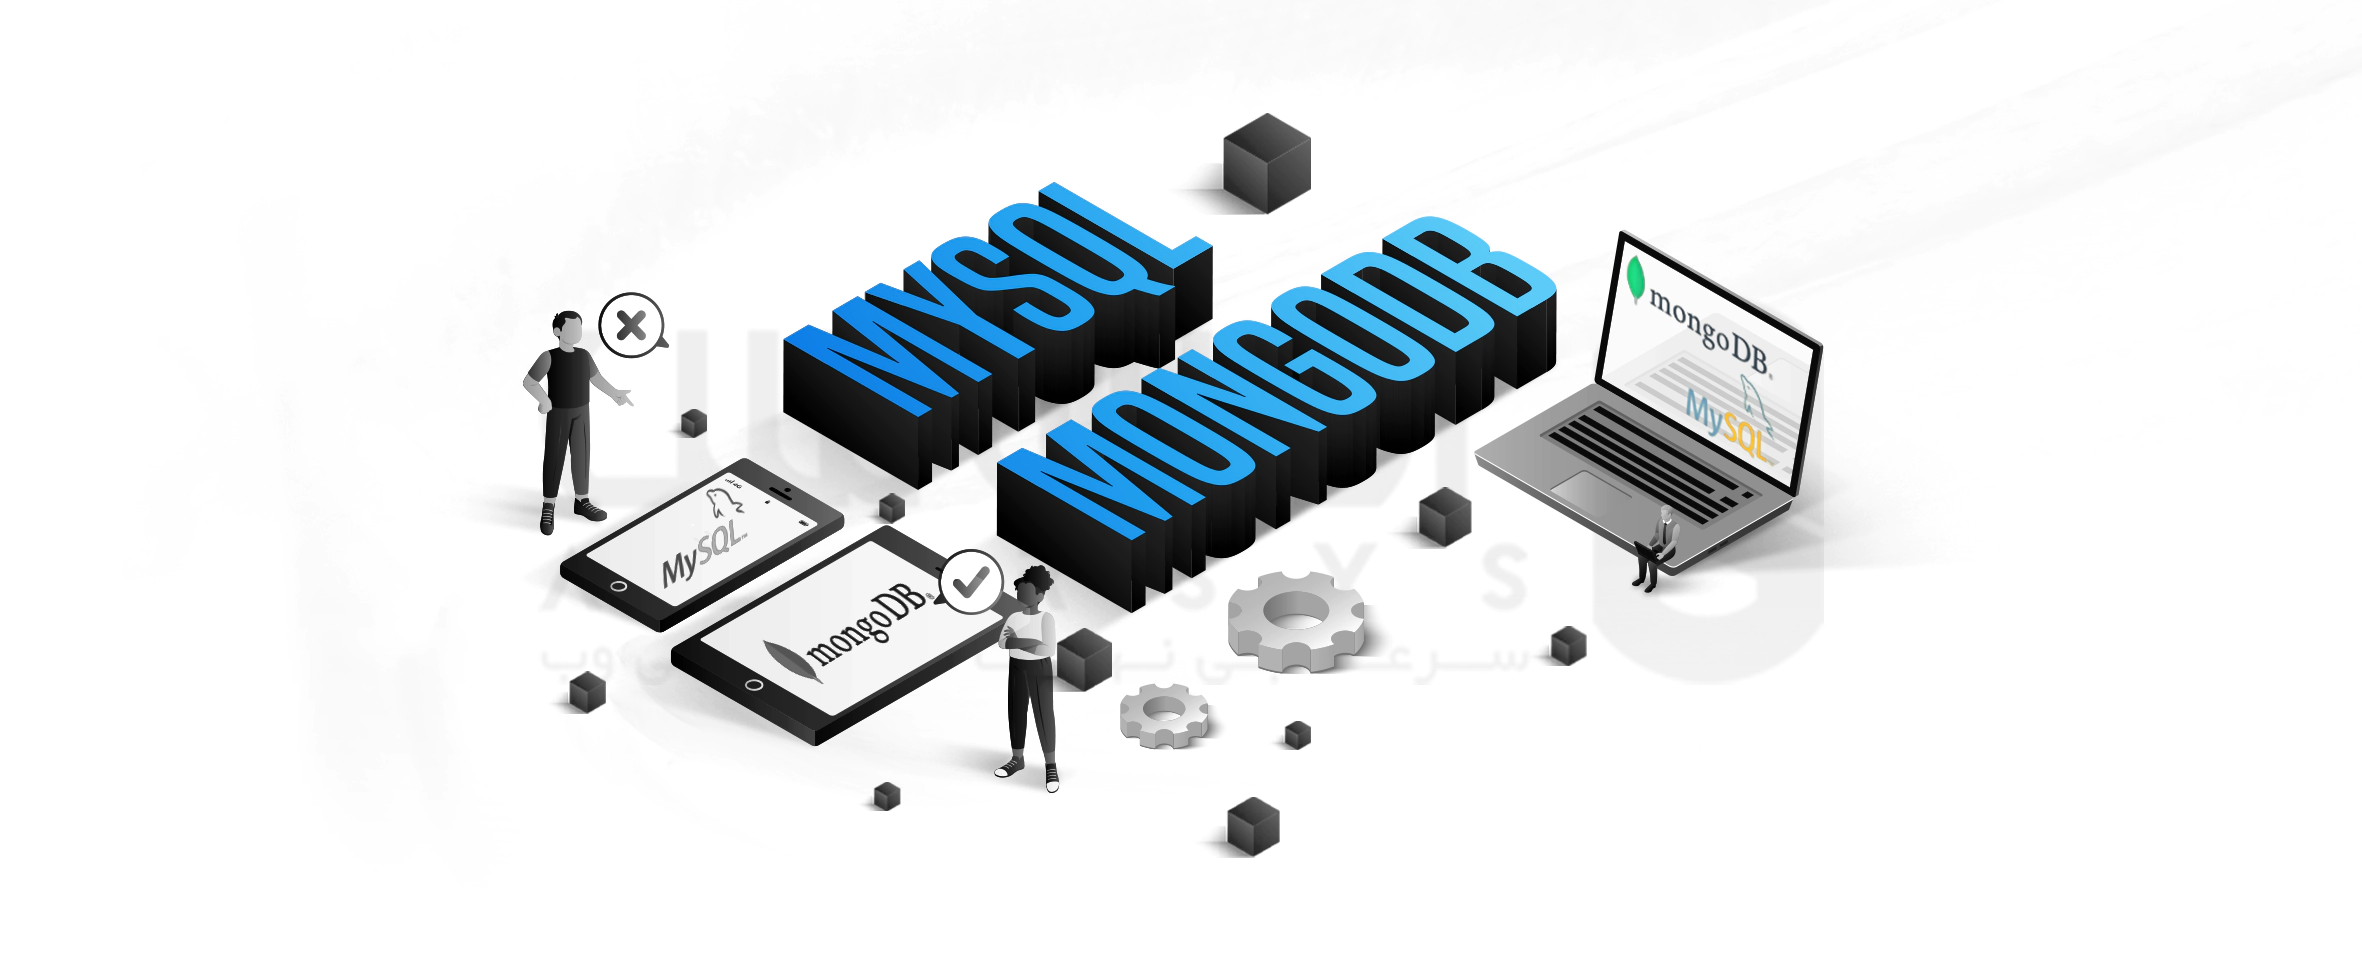 Why use MongoDB instead of MySQL